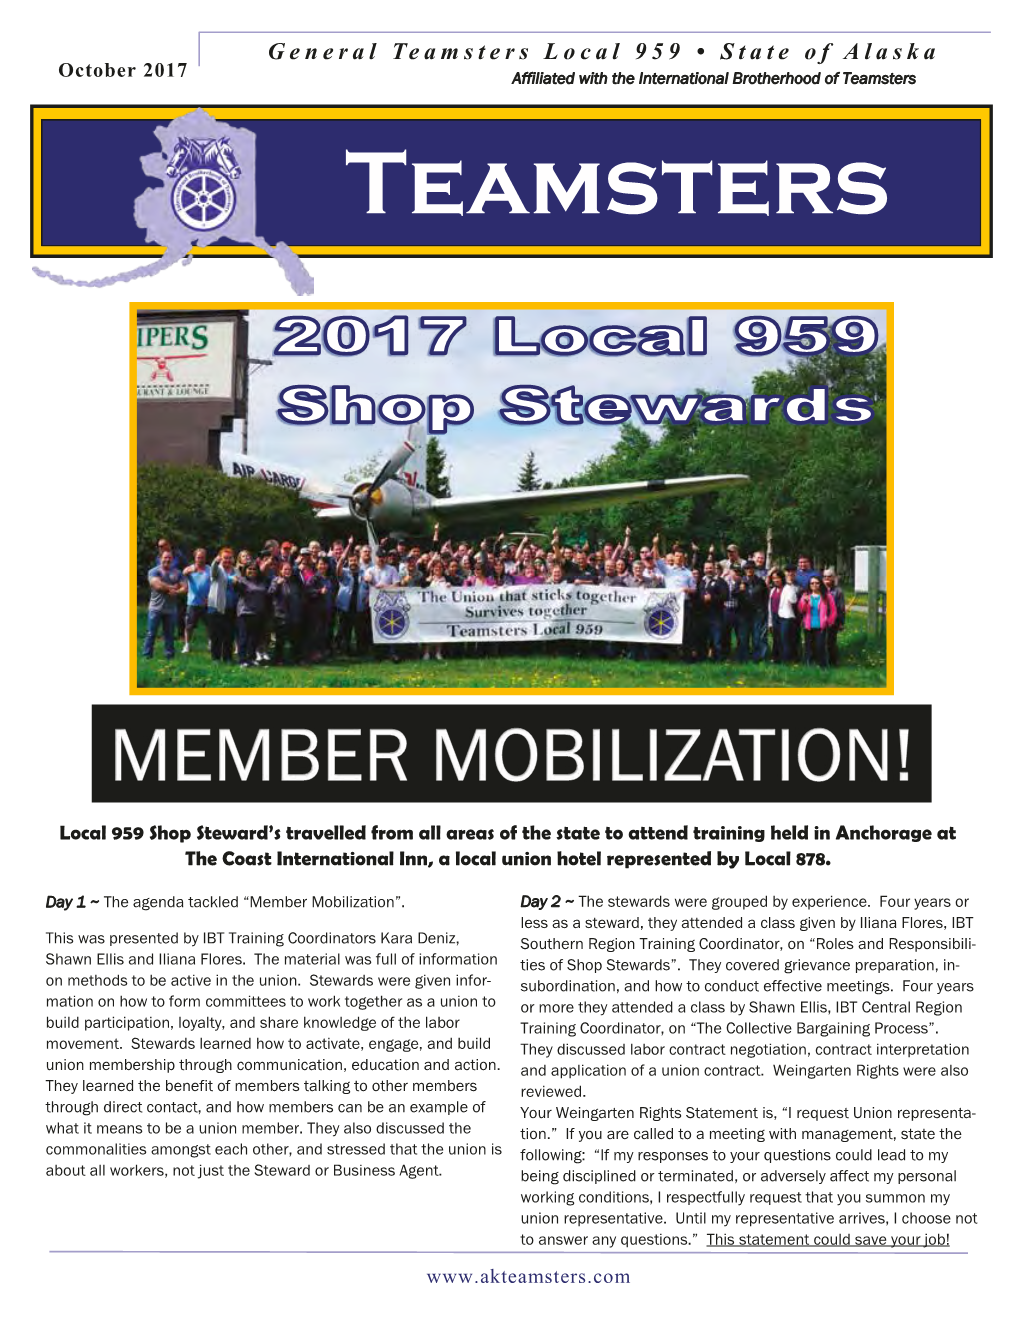 Teamsters 959 Newsletter October 2017